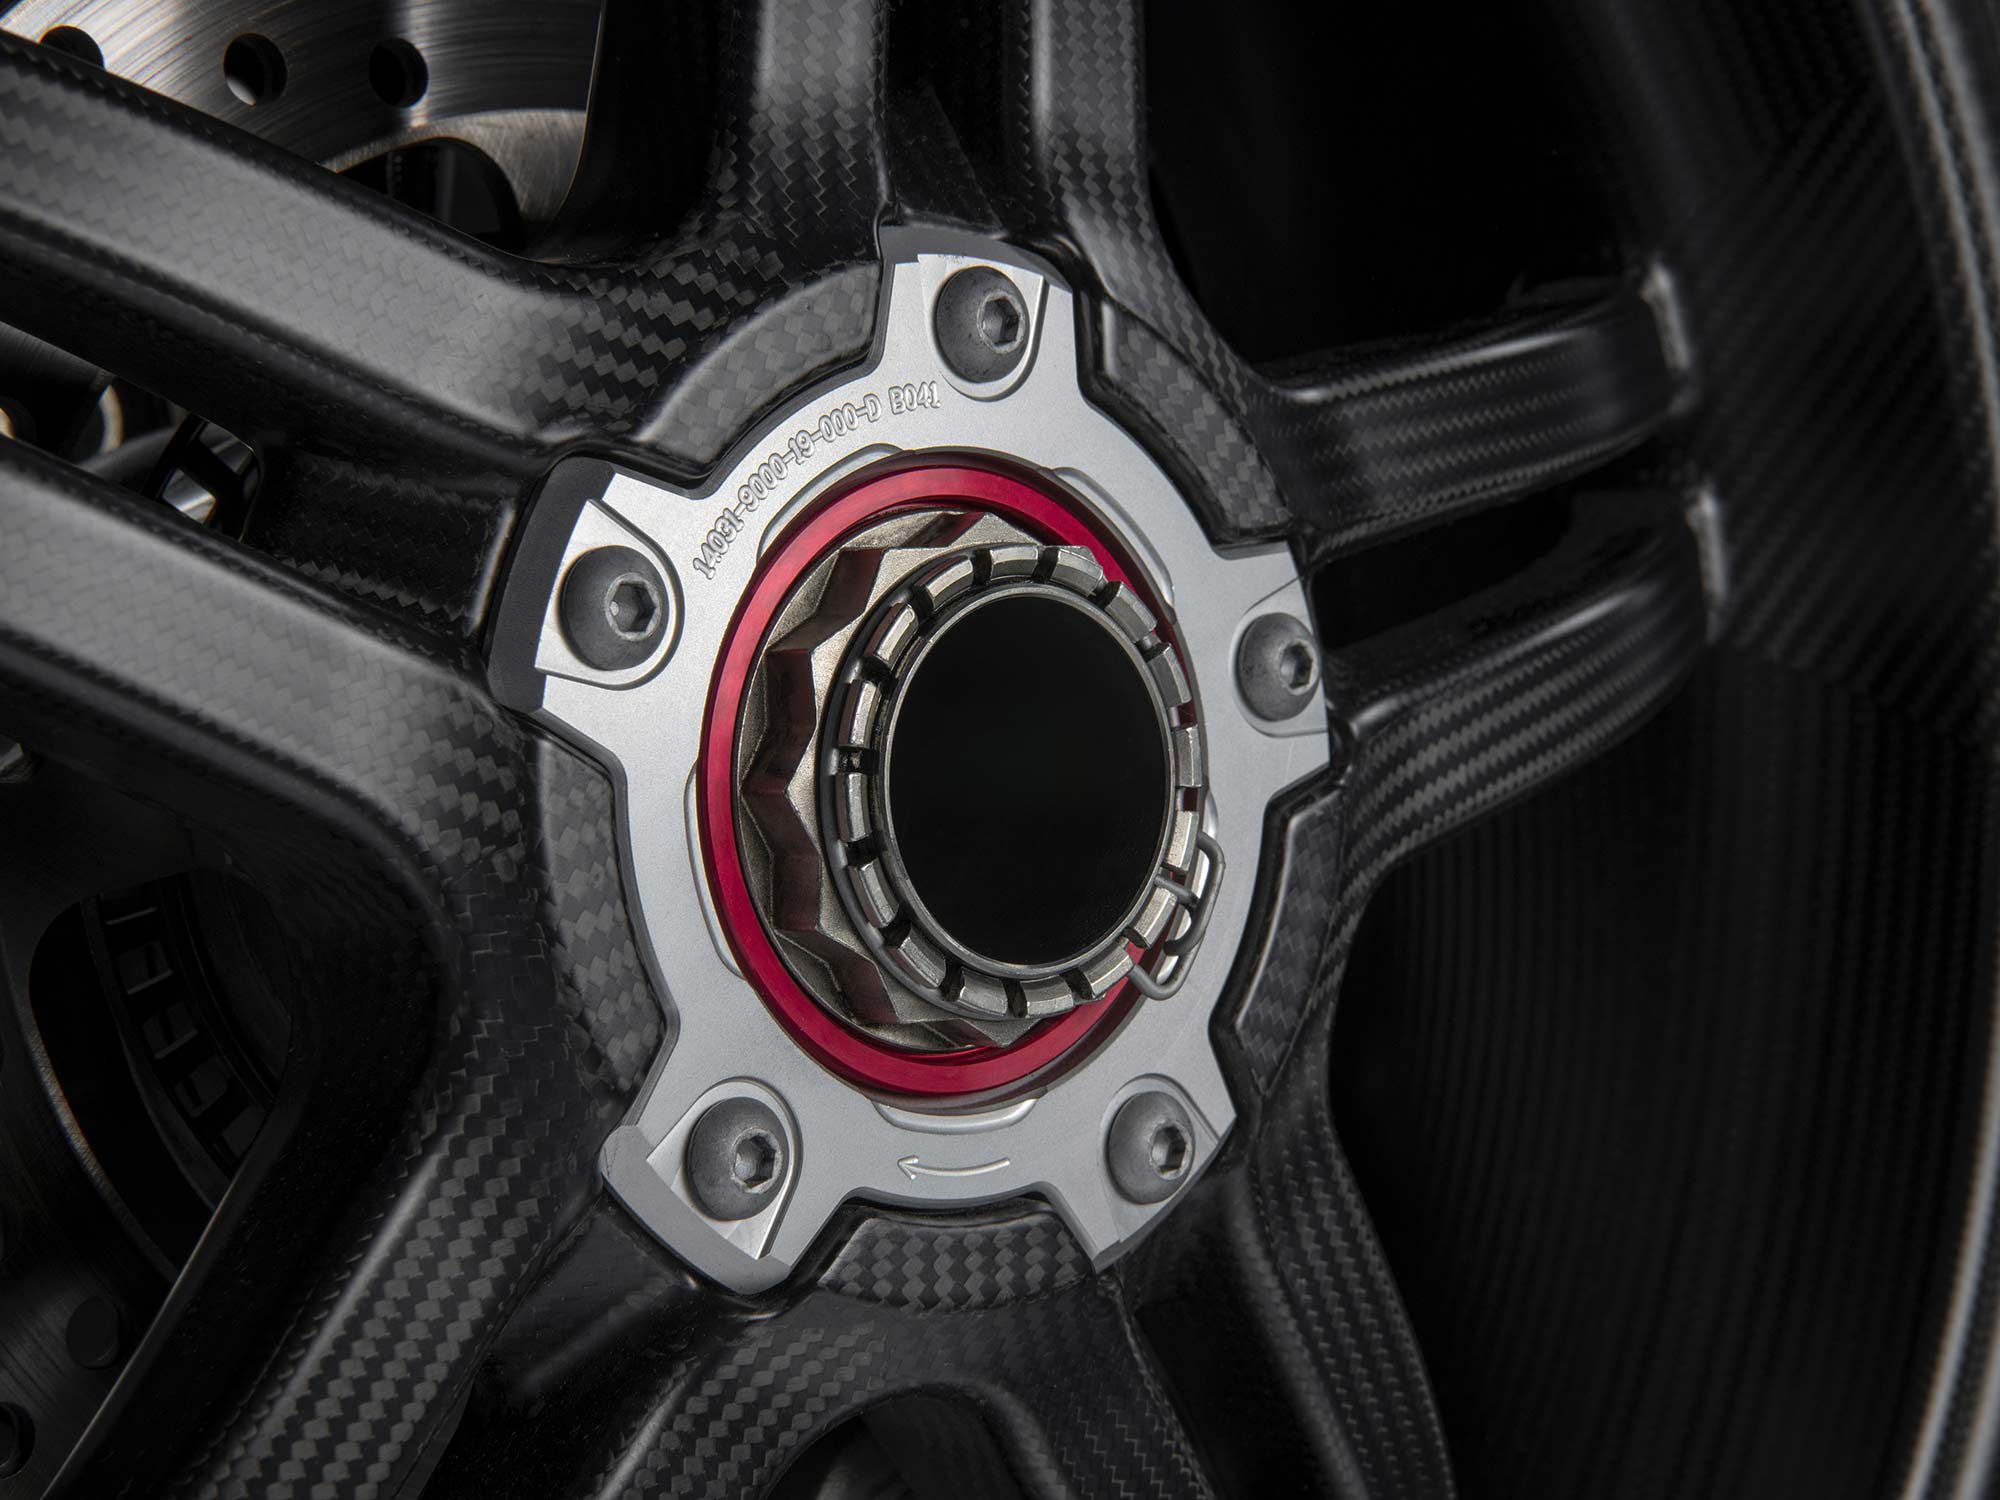 Five split-spoke carbon fiber wheels help the SP2 shave weight.